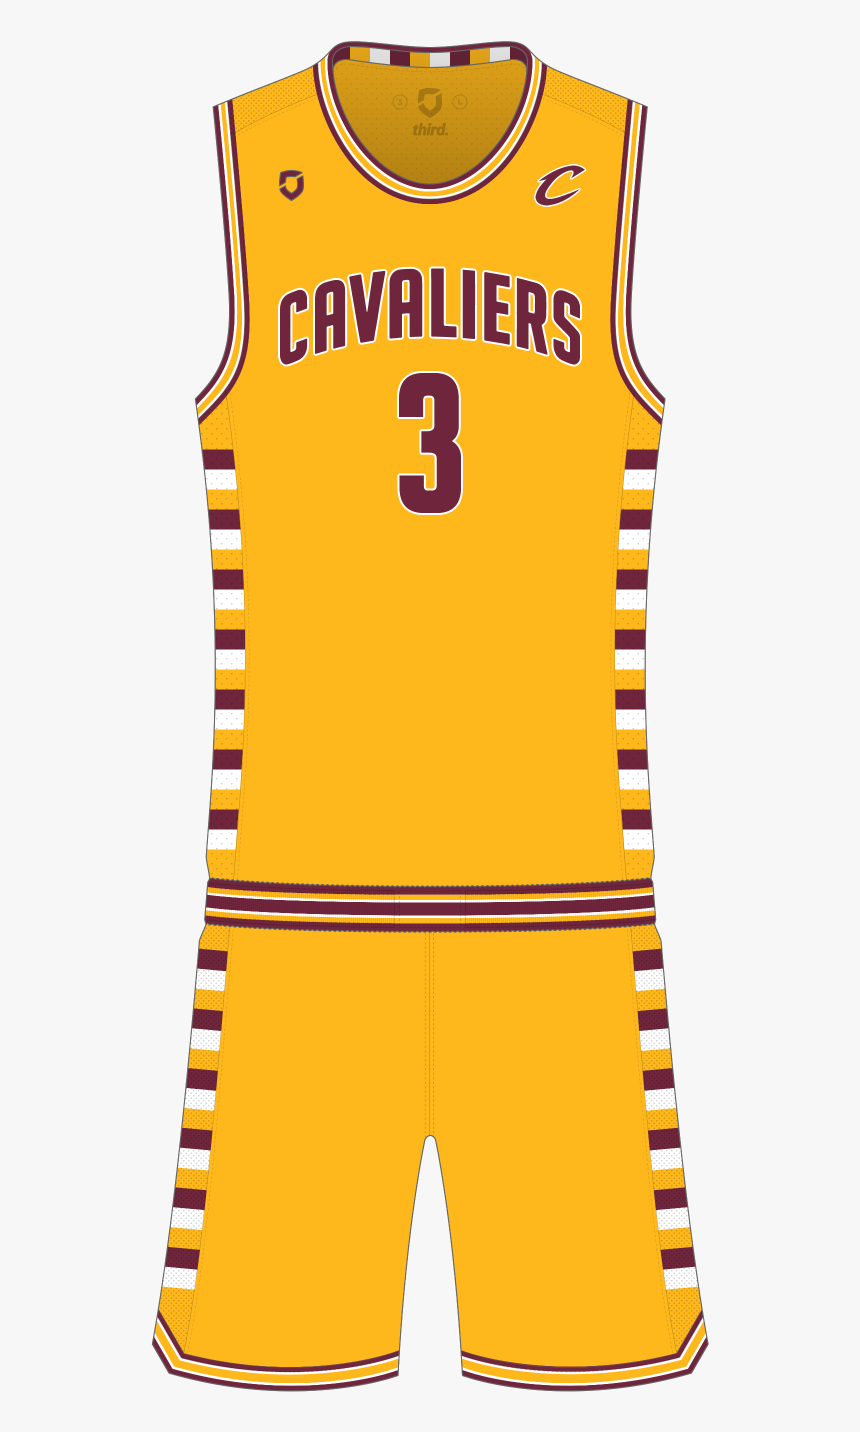 cleveland cavaliers jersey design